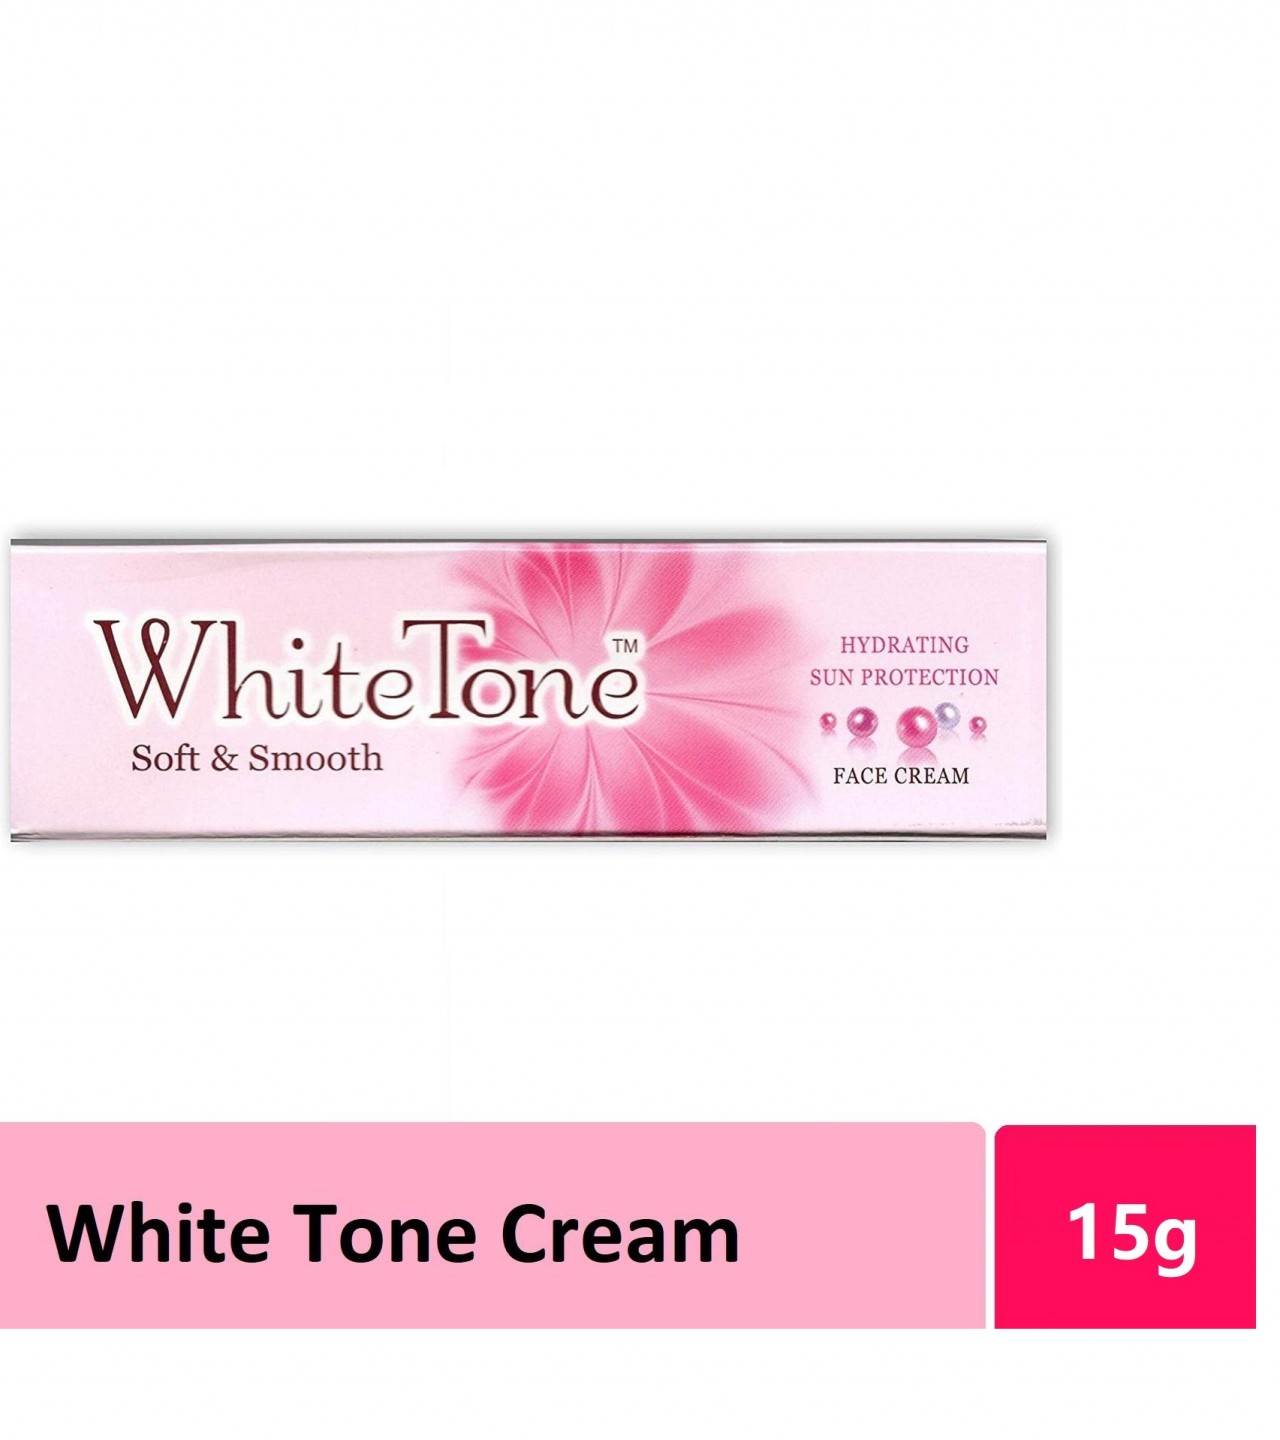 White Tone Soft & Smooth Face Cream (India) - 15g